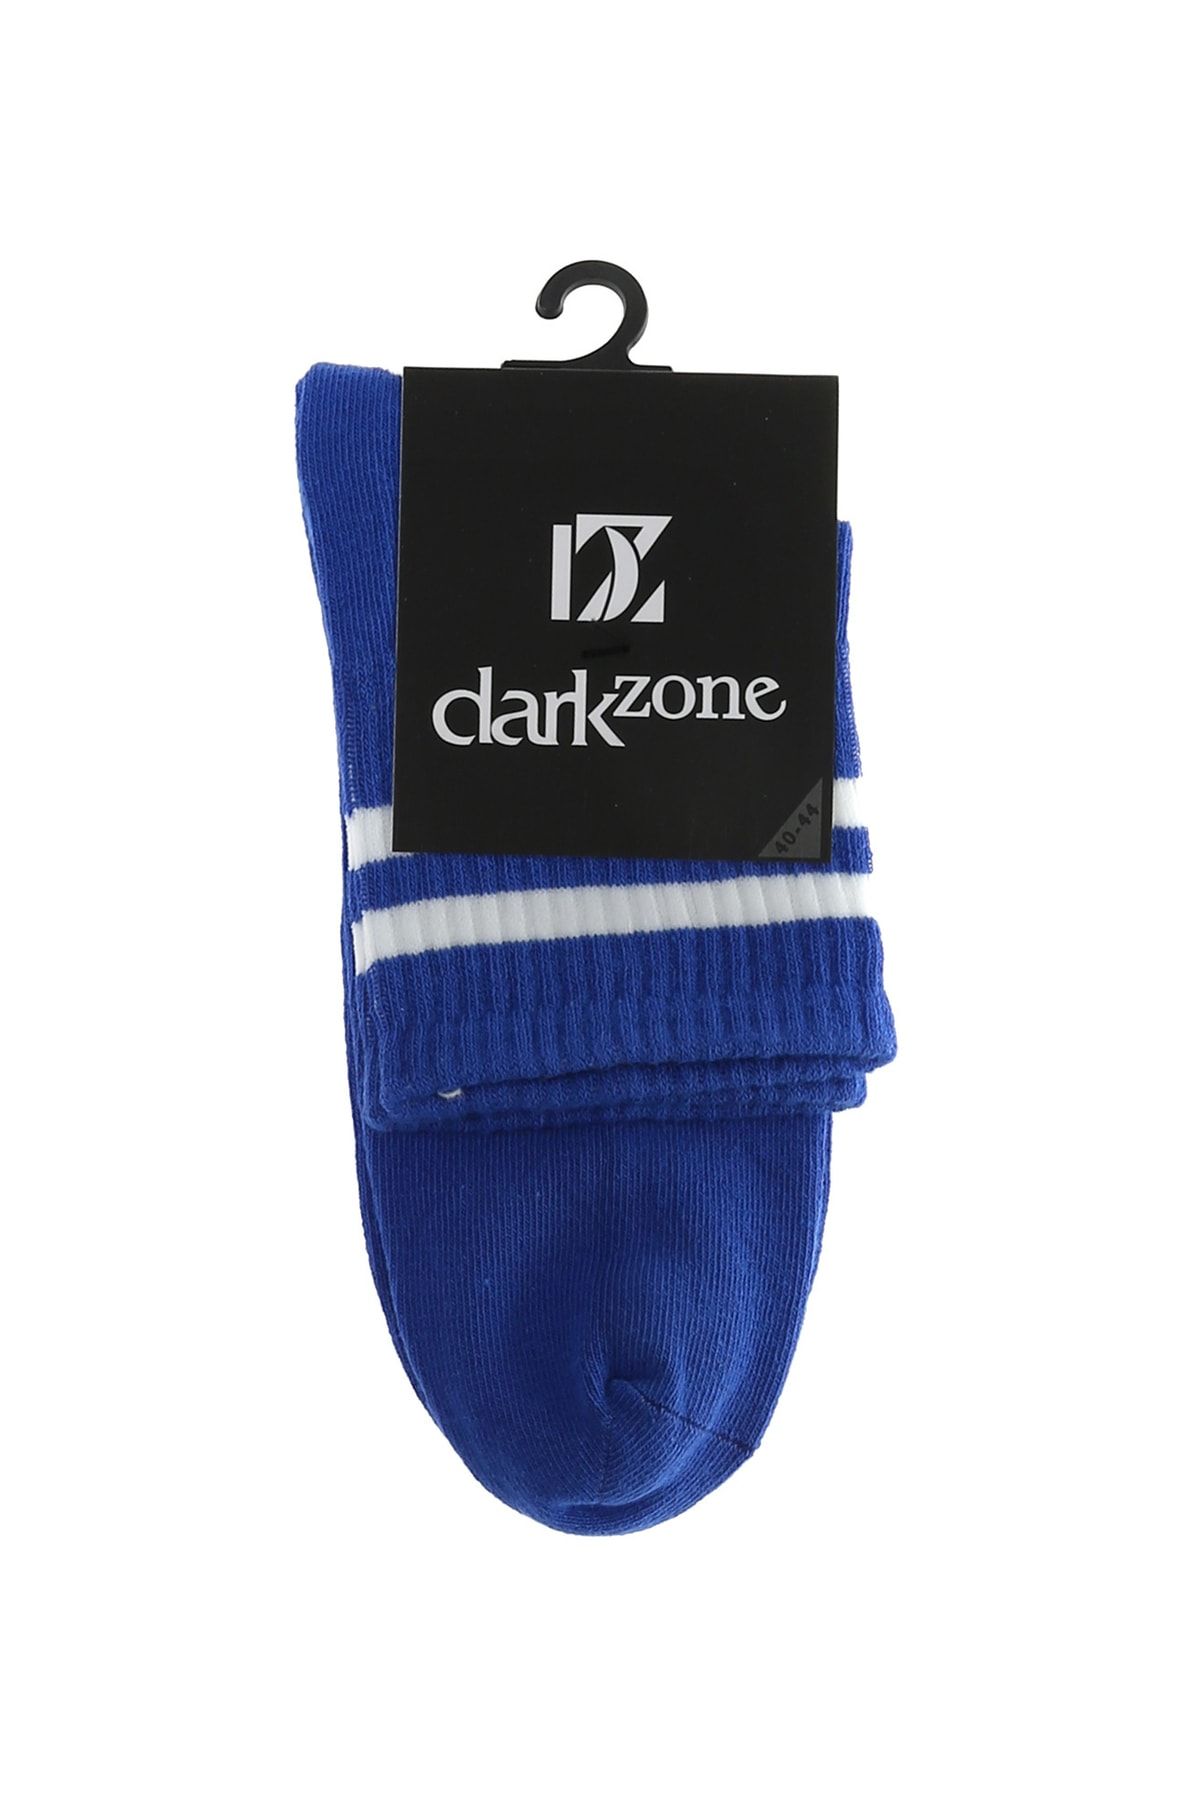 Darkzone Dzcp0047 Çok Renkli Erkek Çorap